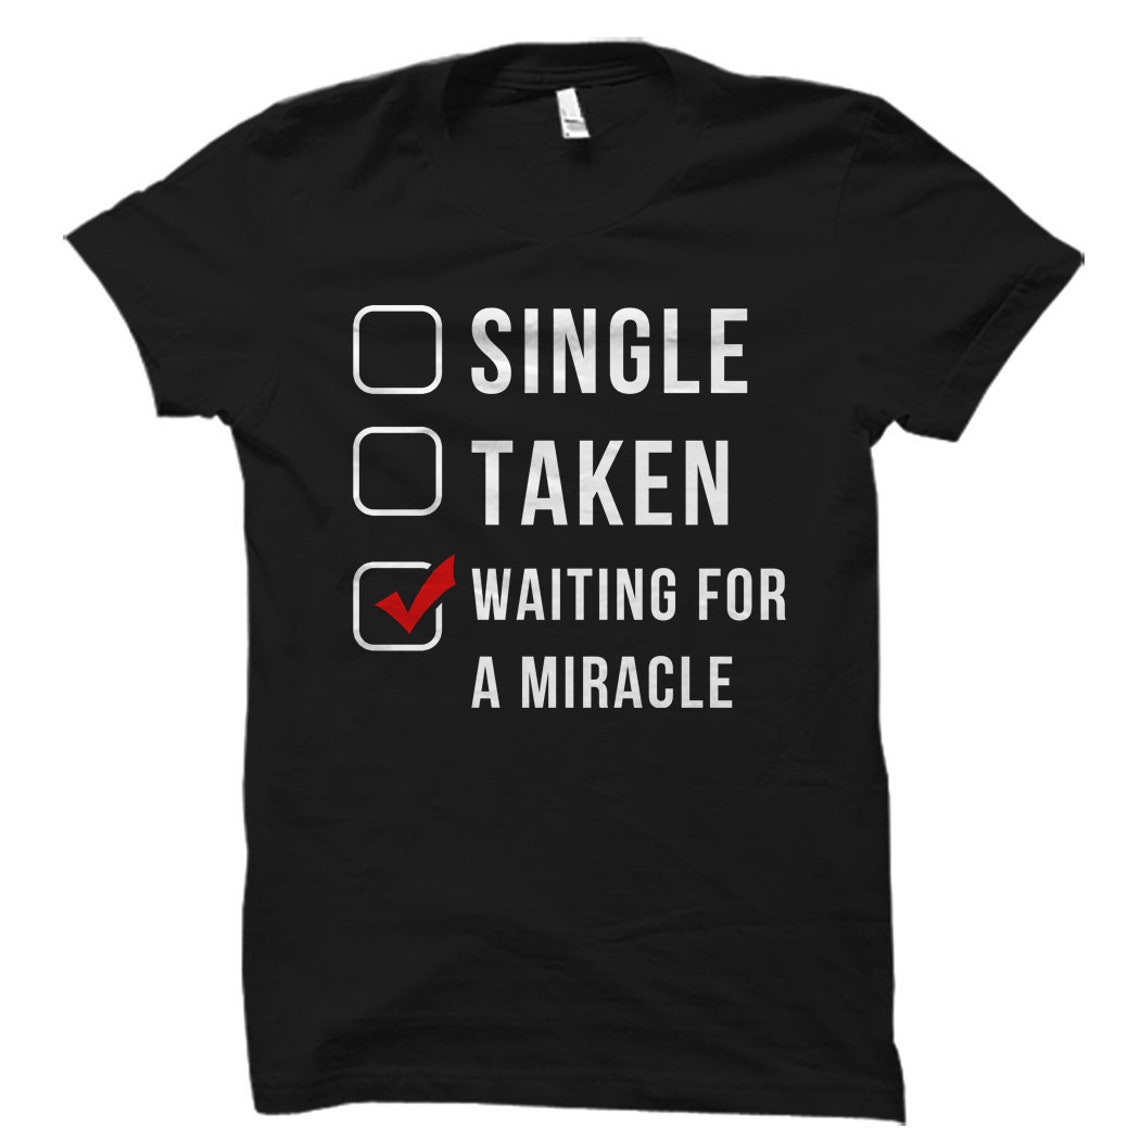 Funny Single Gift, Single Shirt, Gift for Single